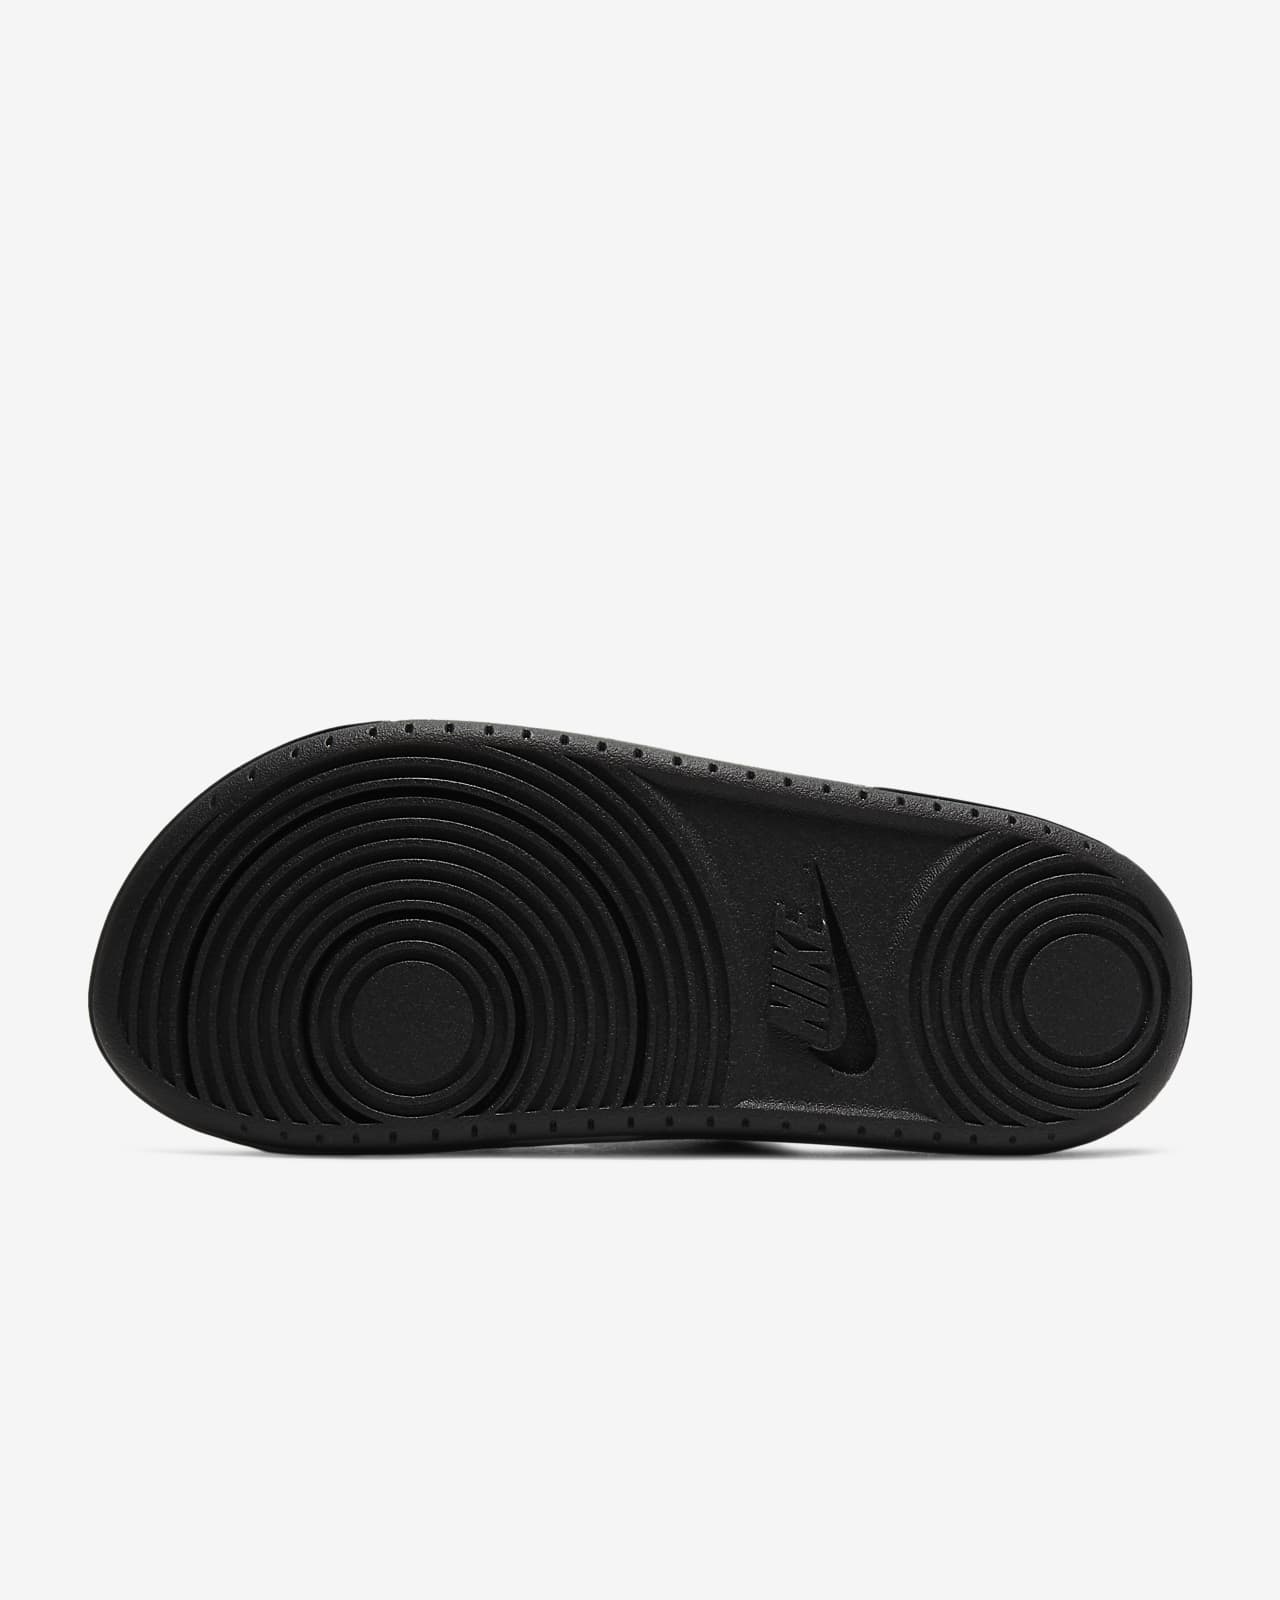 Nike W OffCourt Duo Slides (8), Women's Fashion, Footwear